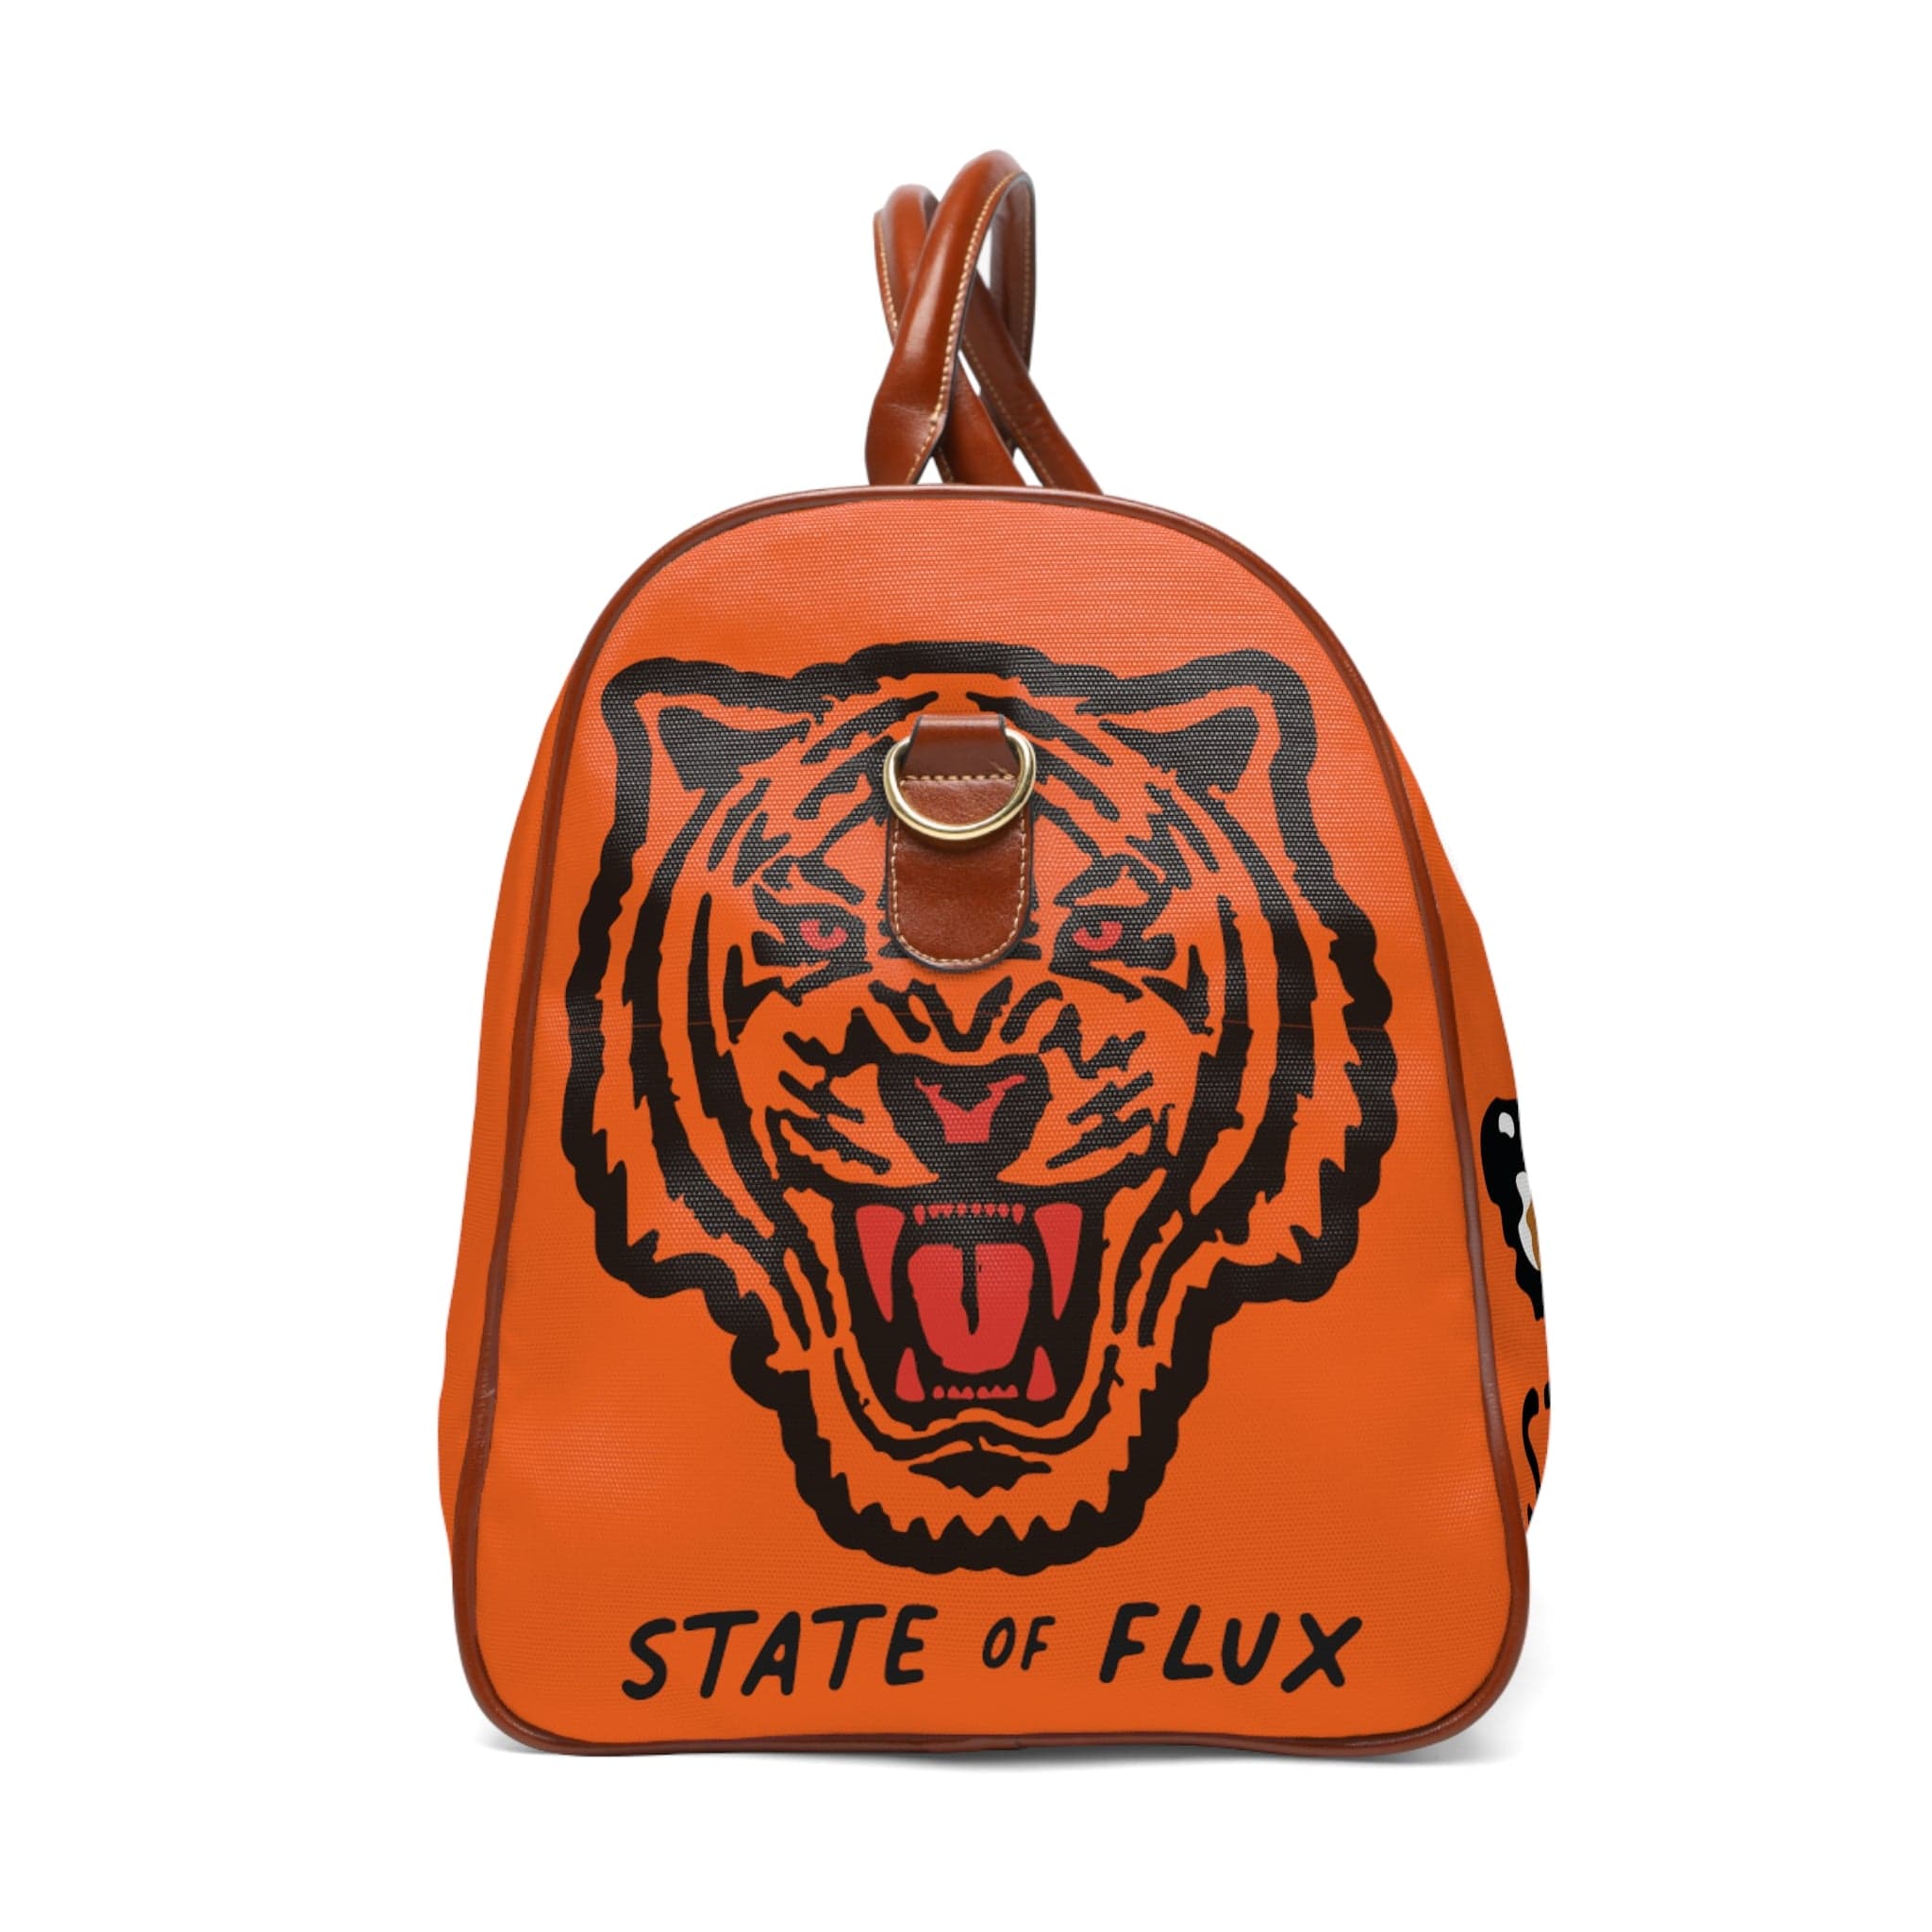 SOF Mojo Weekender Bag in international orange - State Of Flux - State Of Flux